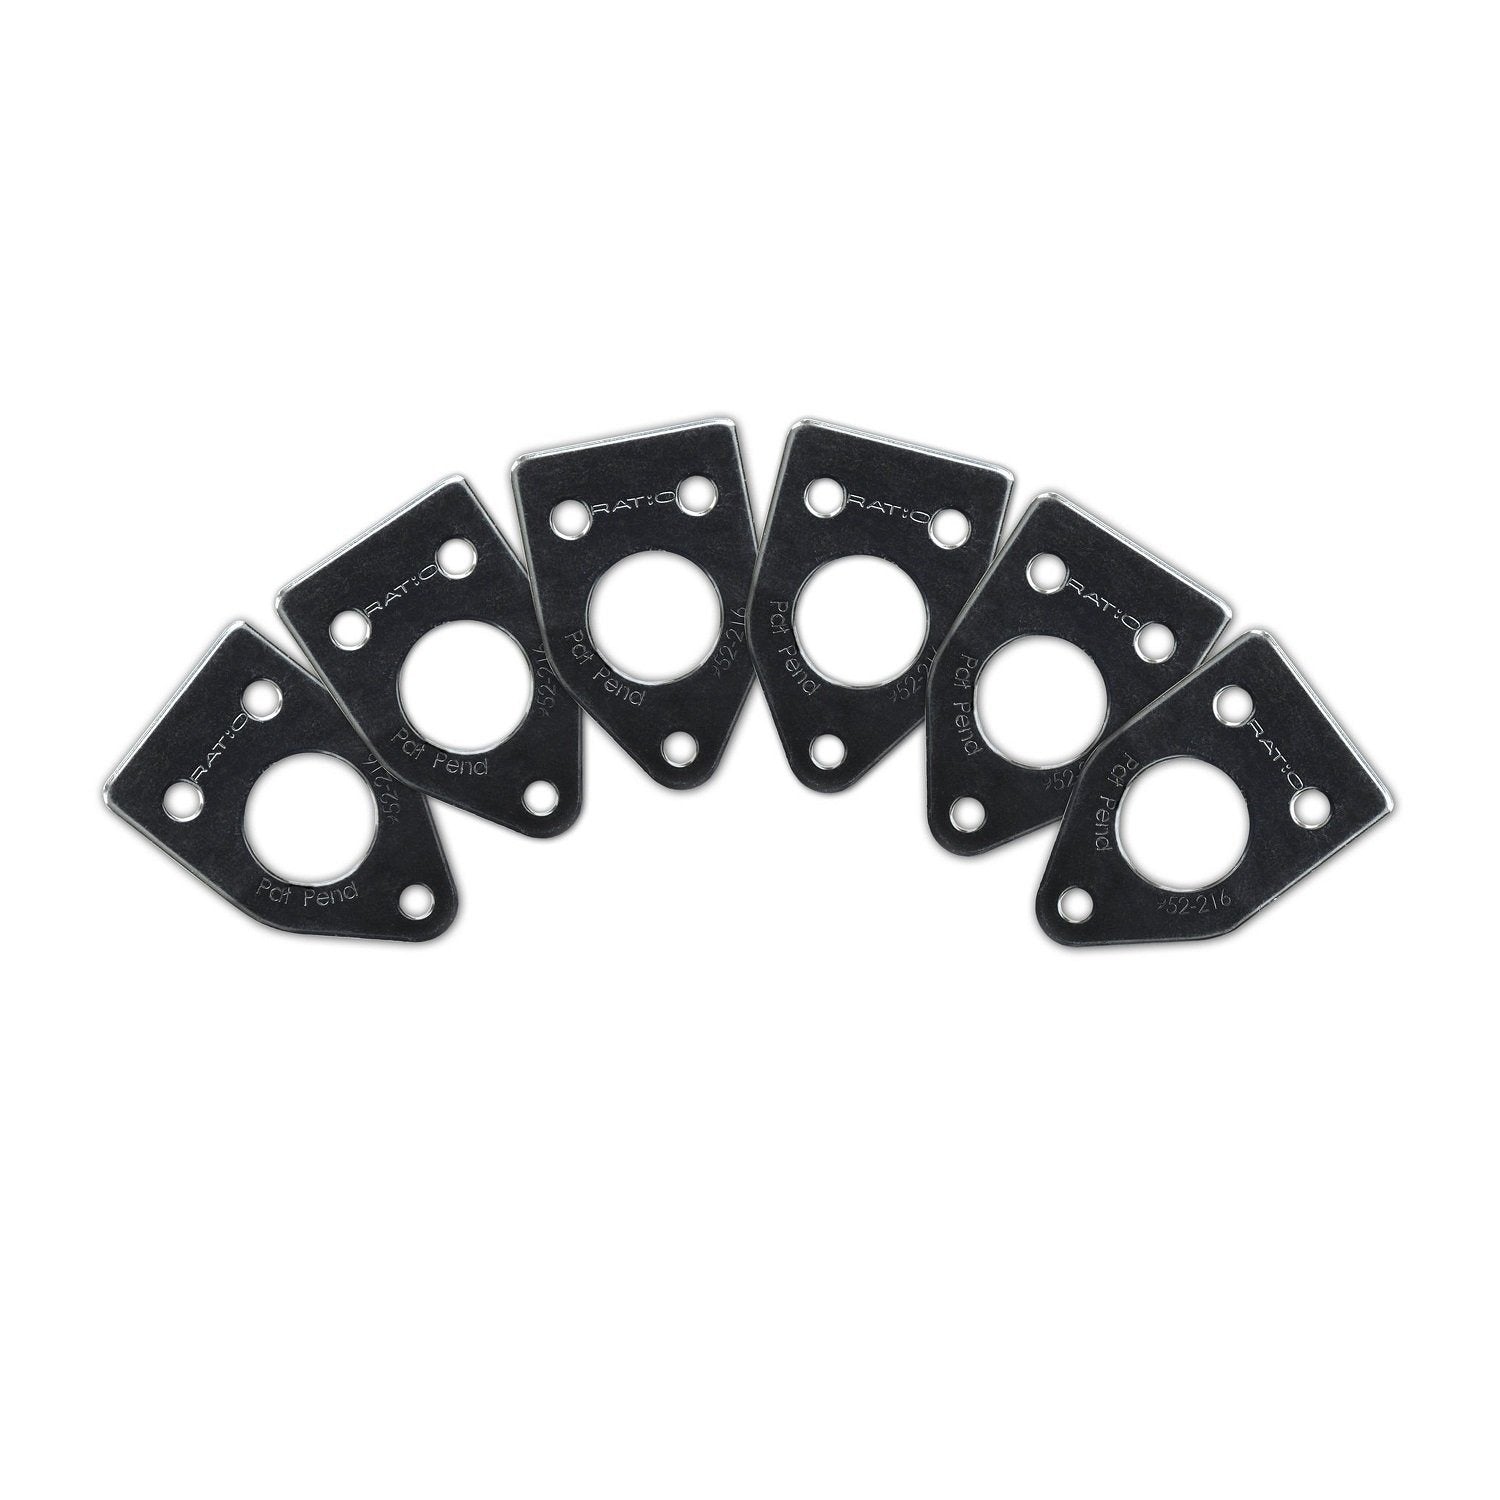 InvisoMatch Plates for Ratio Tuners, 90 Degree Screw Hole (set of 6)  (Select Finish)